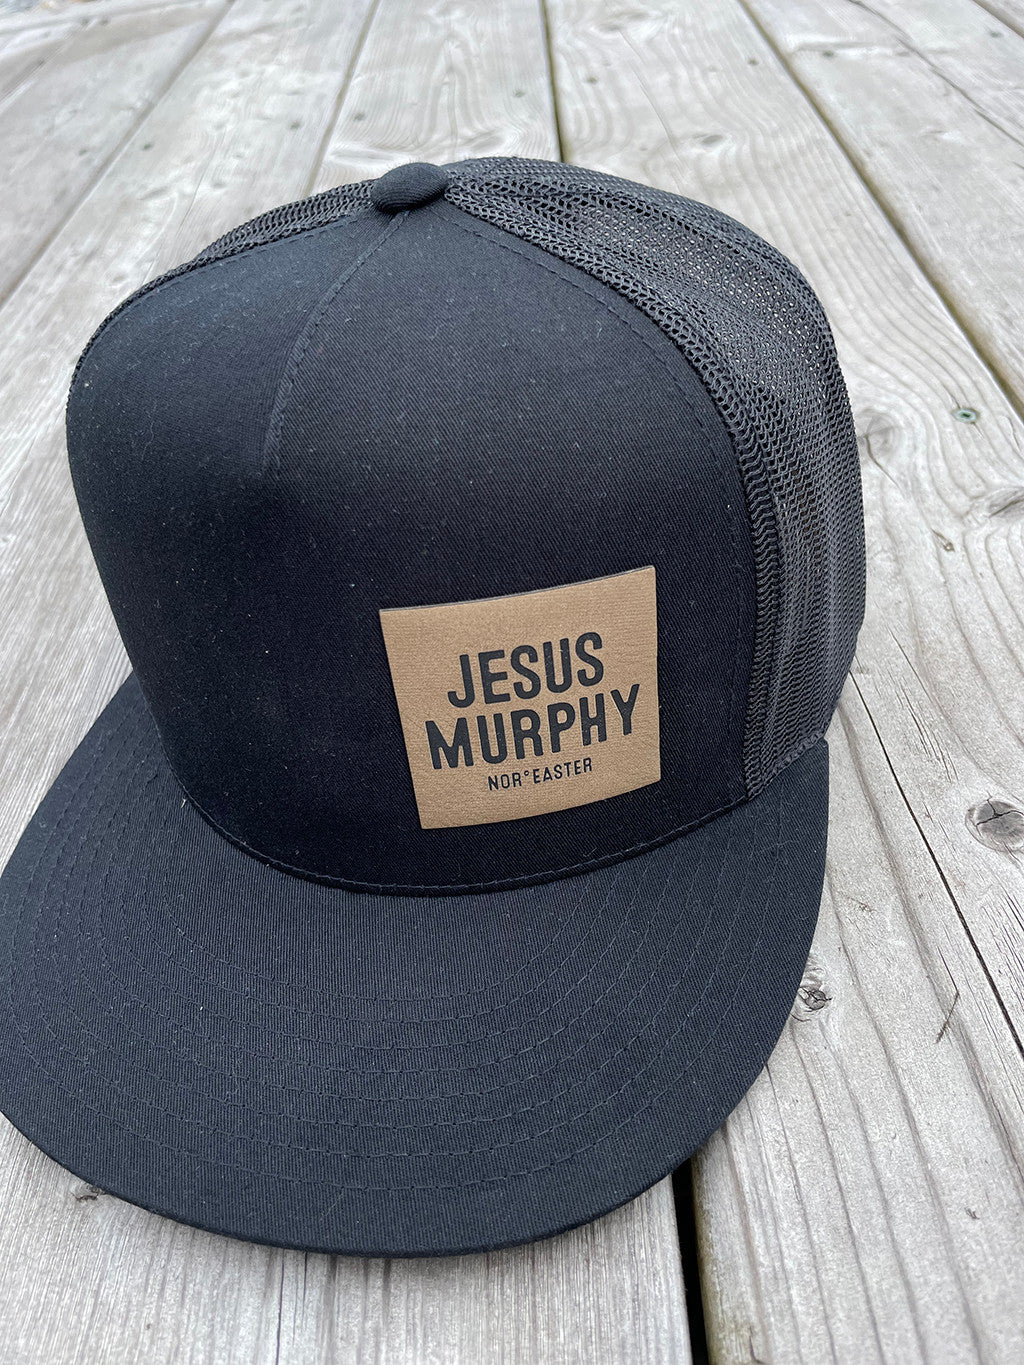 Jesus Murphy Trucker Hat